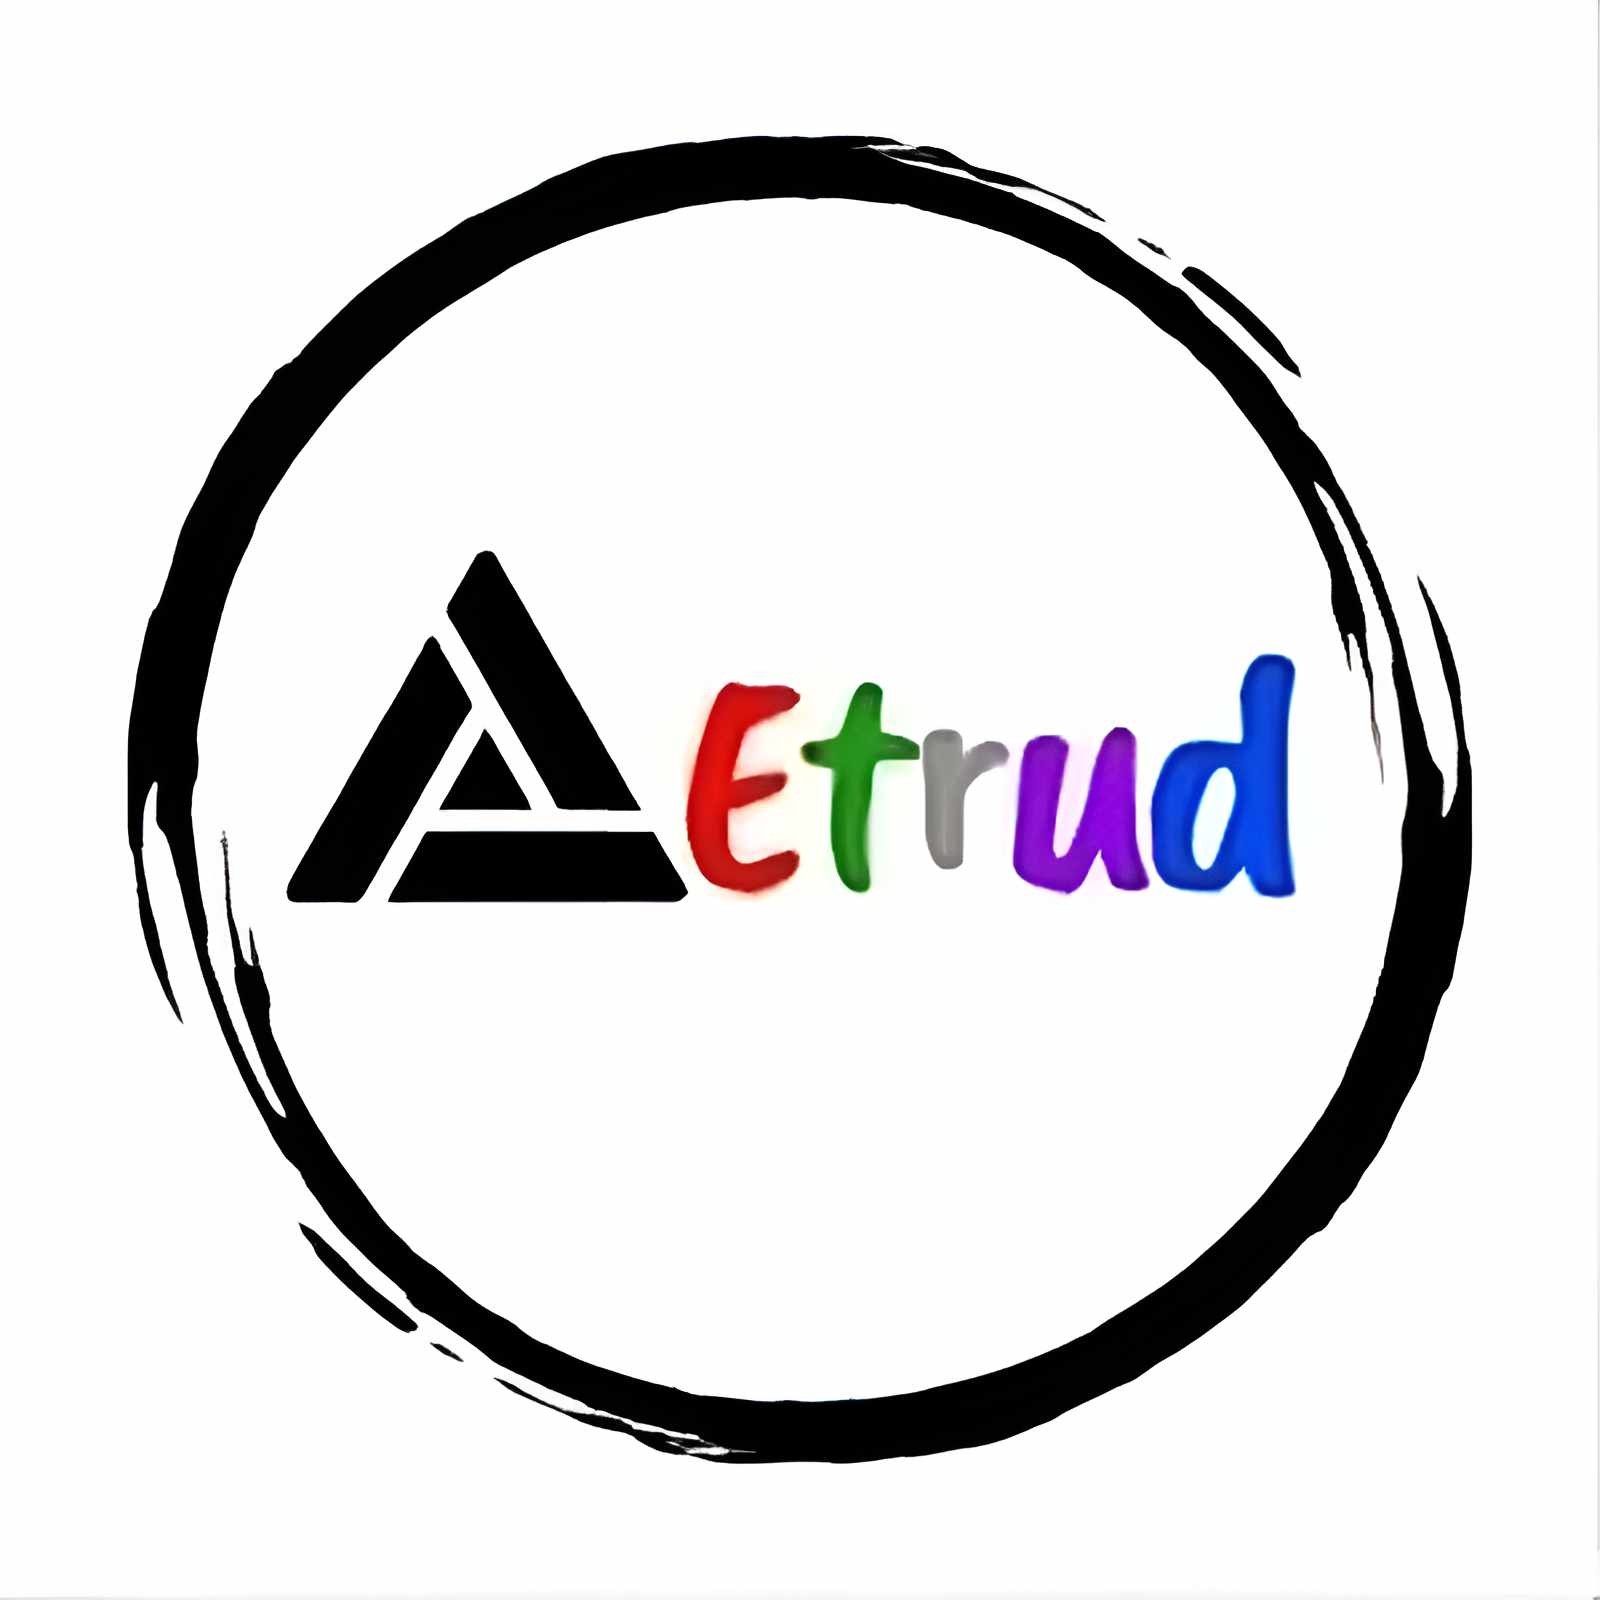 Etrud